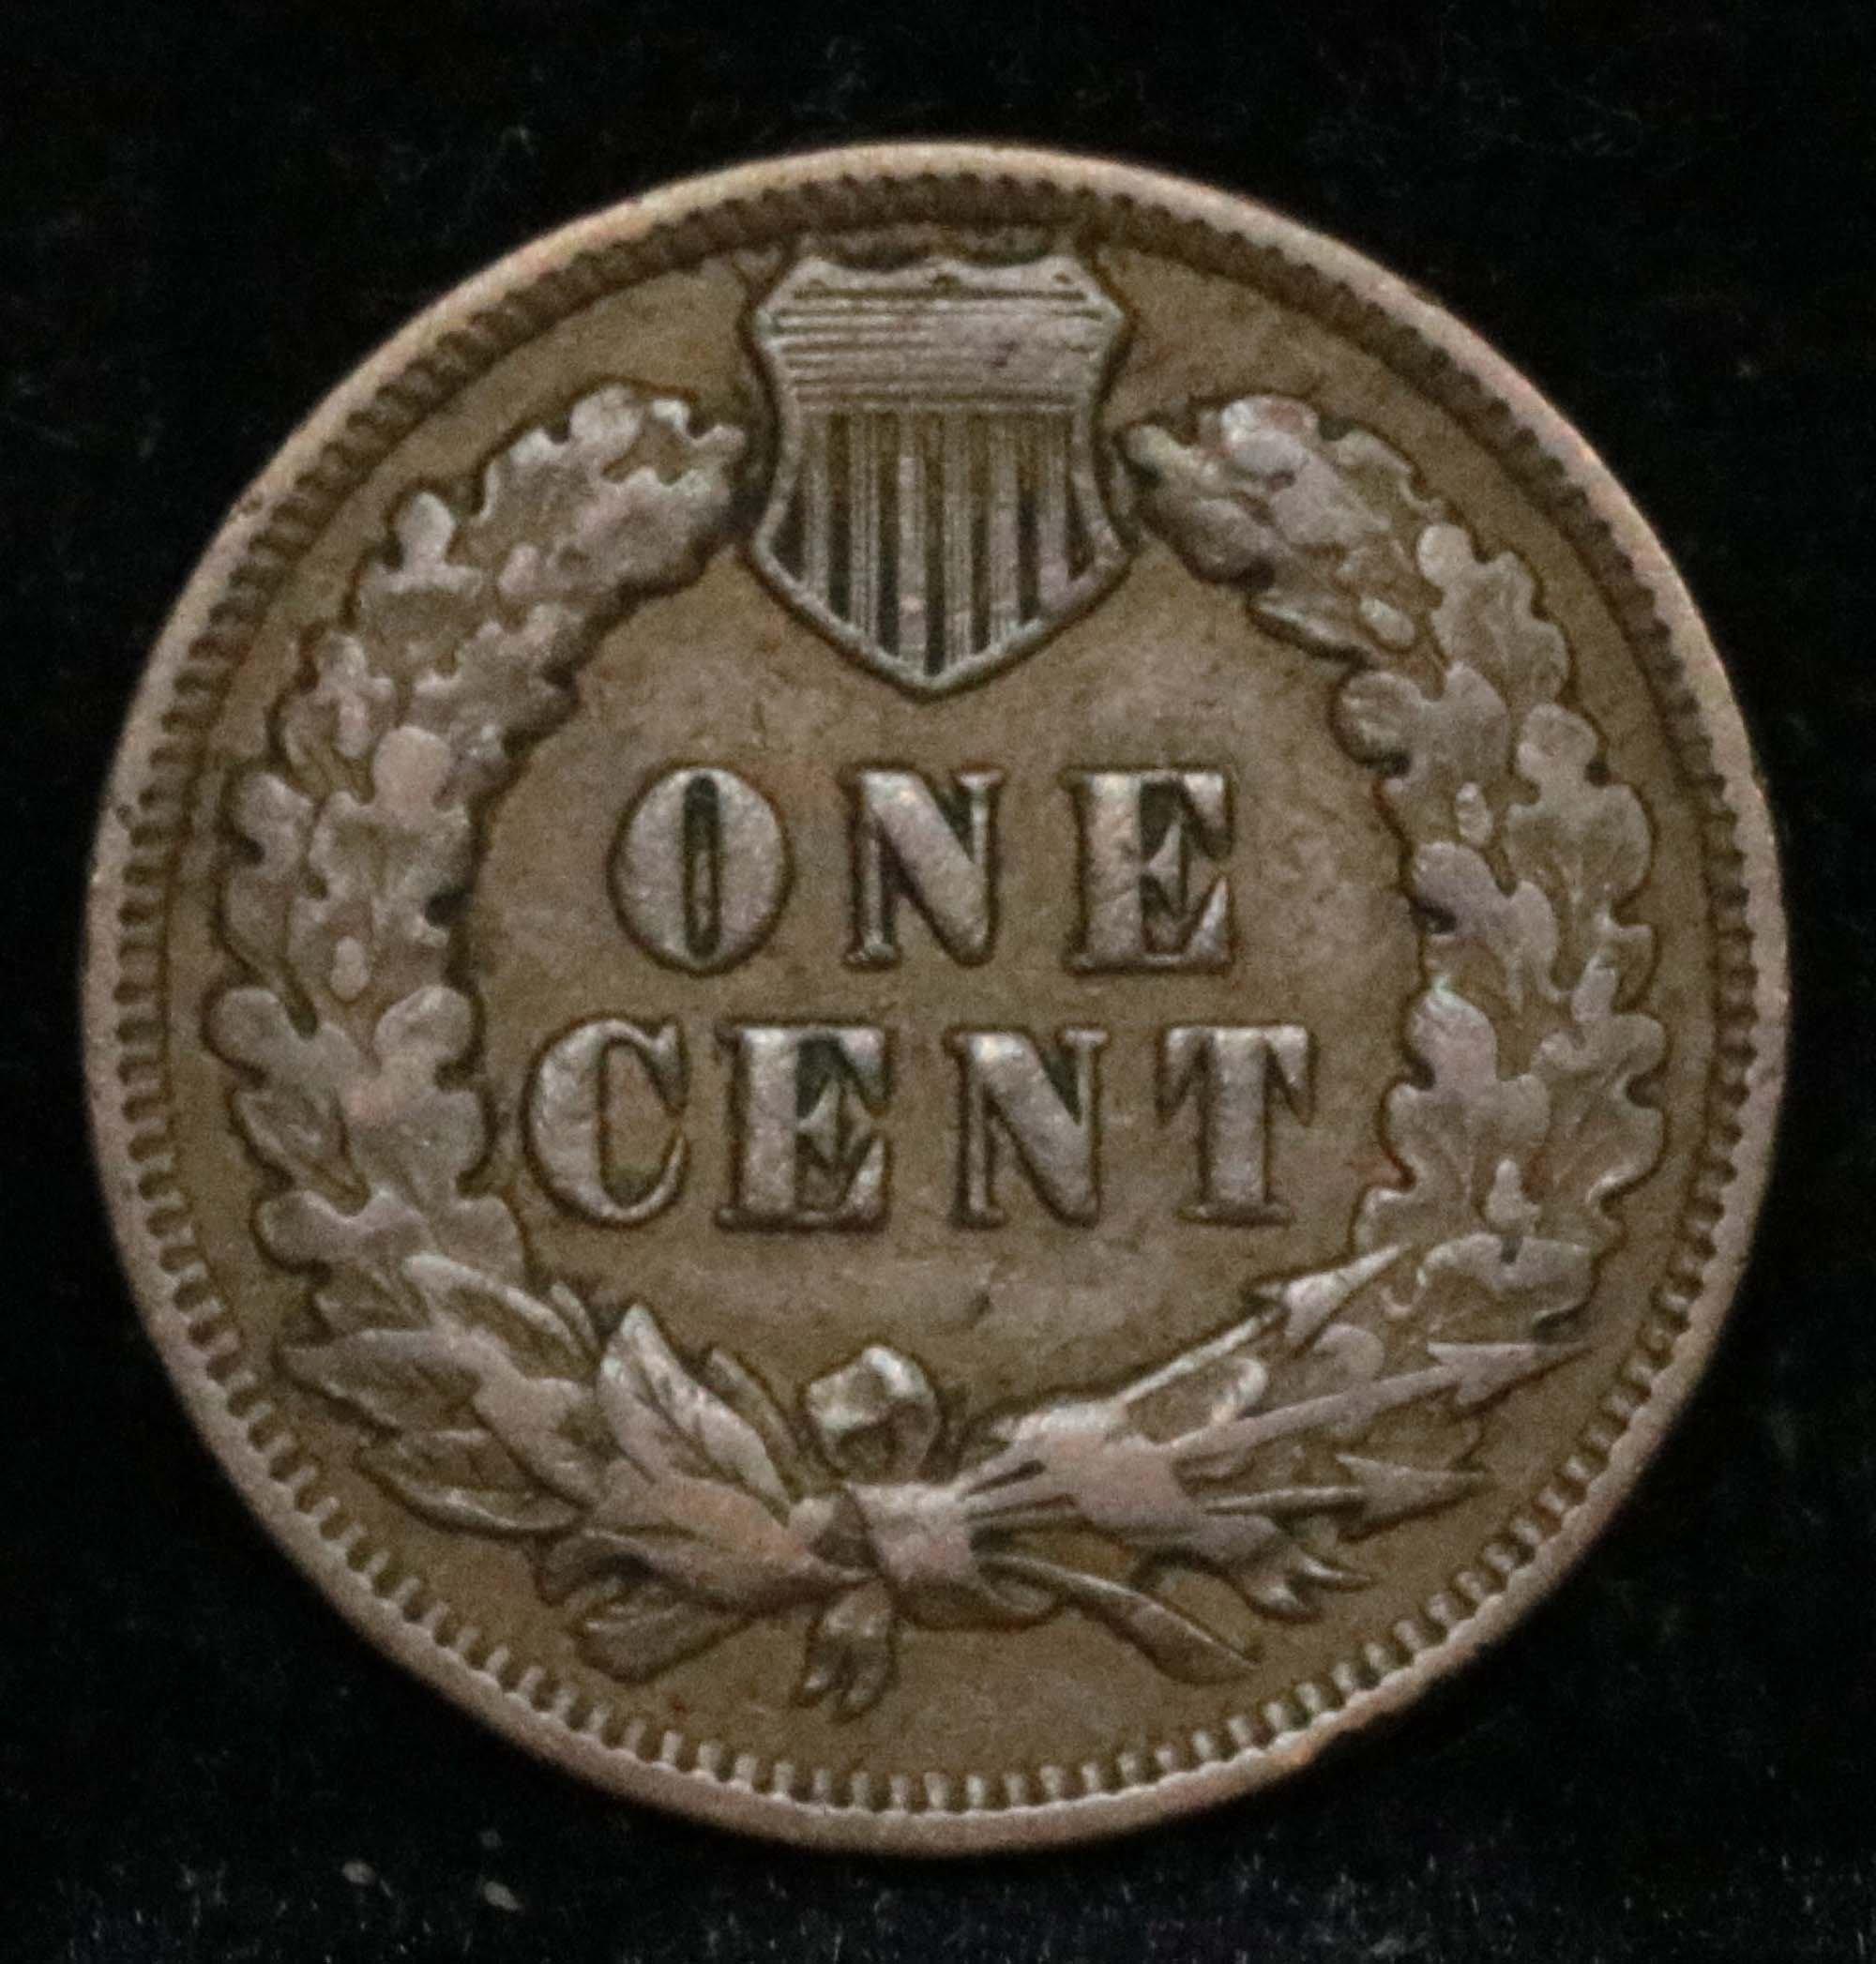 1909 Indian Cent 1c Grades vf, very fine